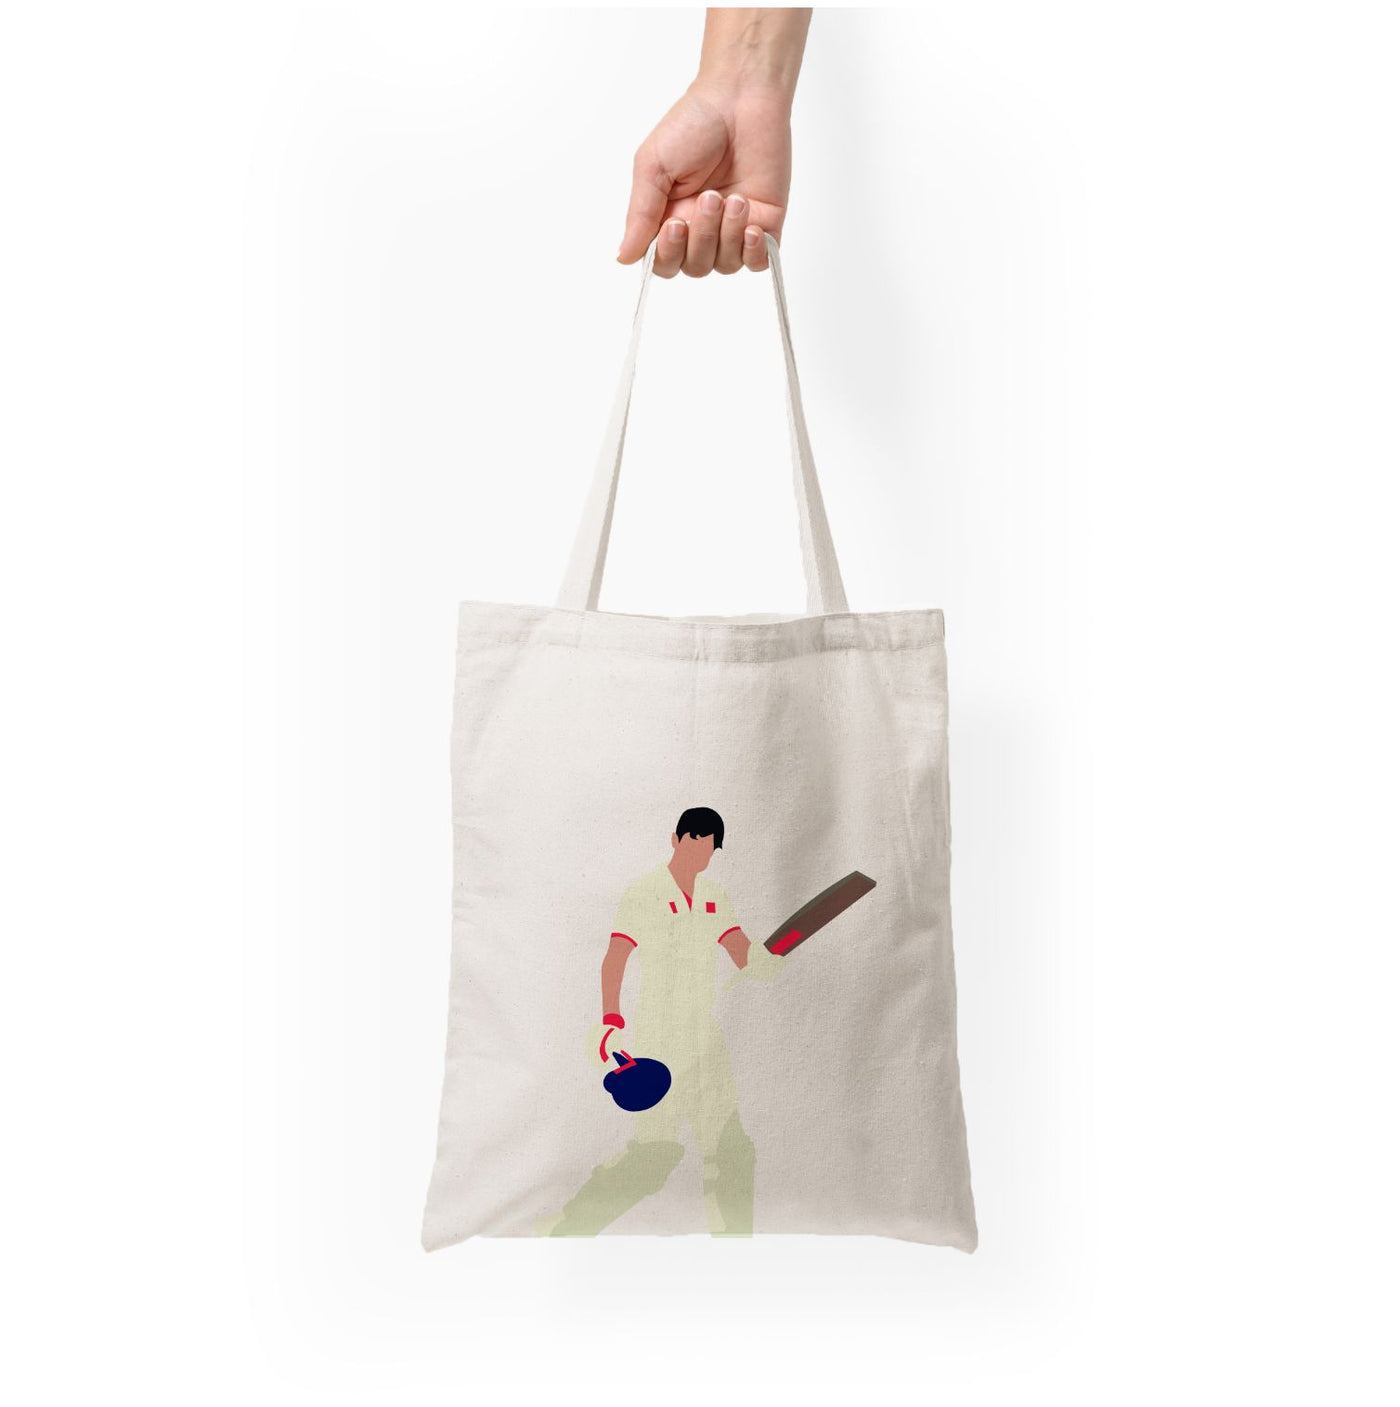 Alastair Cook - Cricket Tote Bag